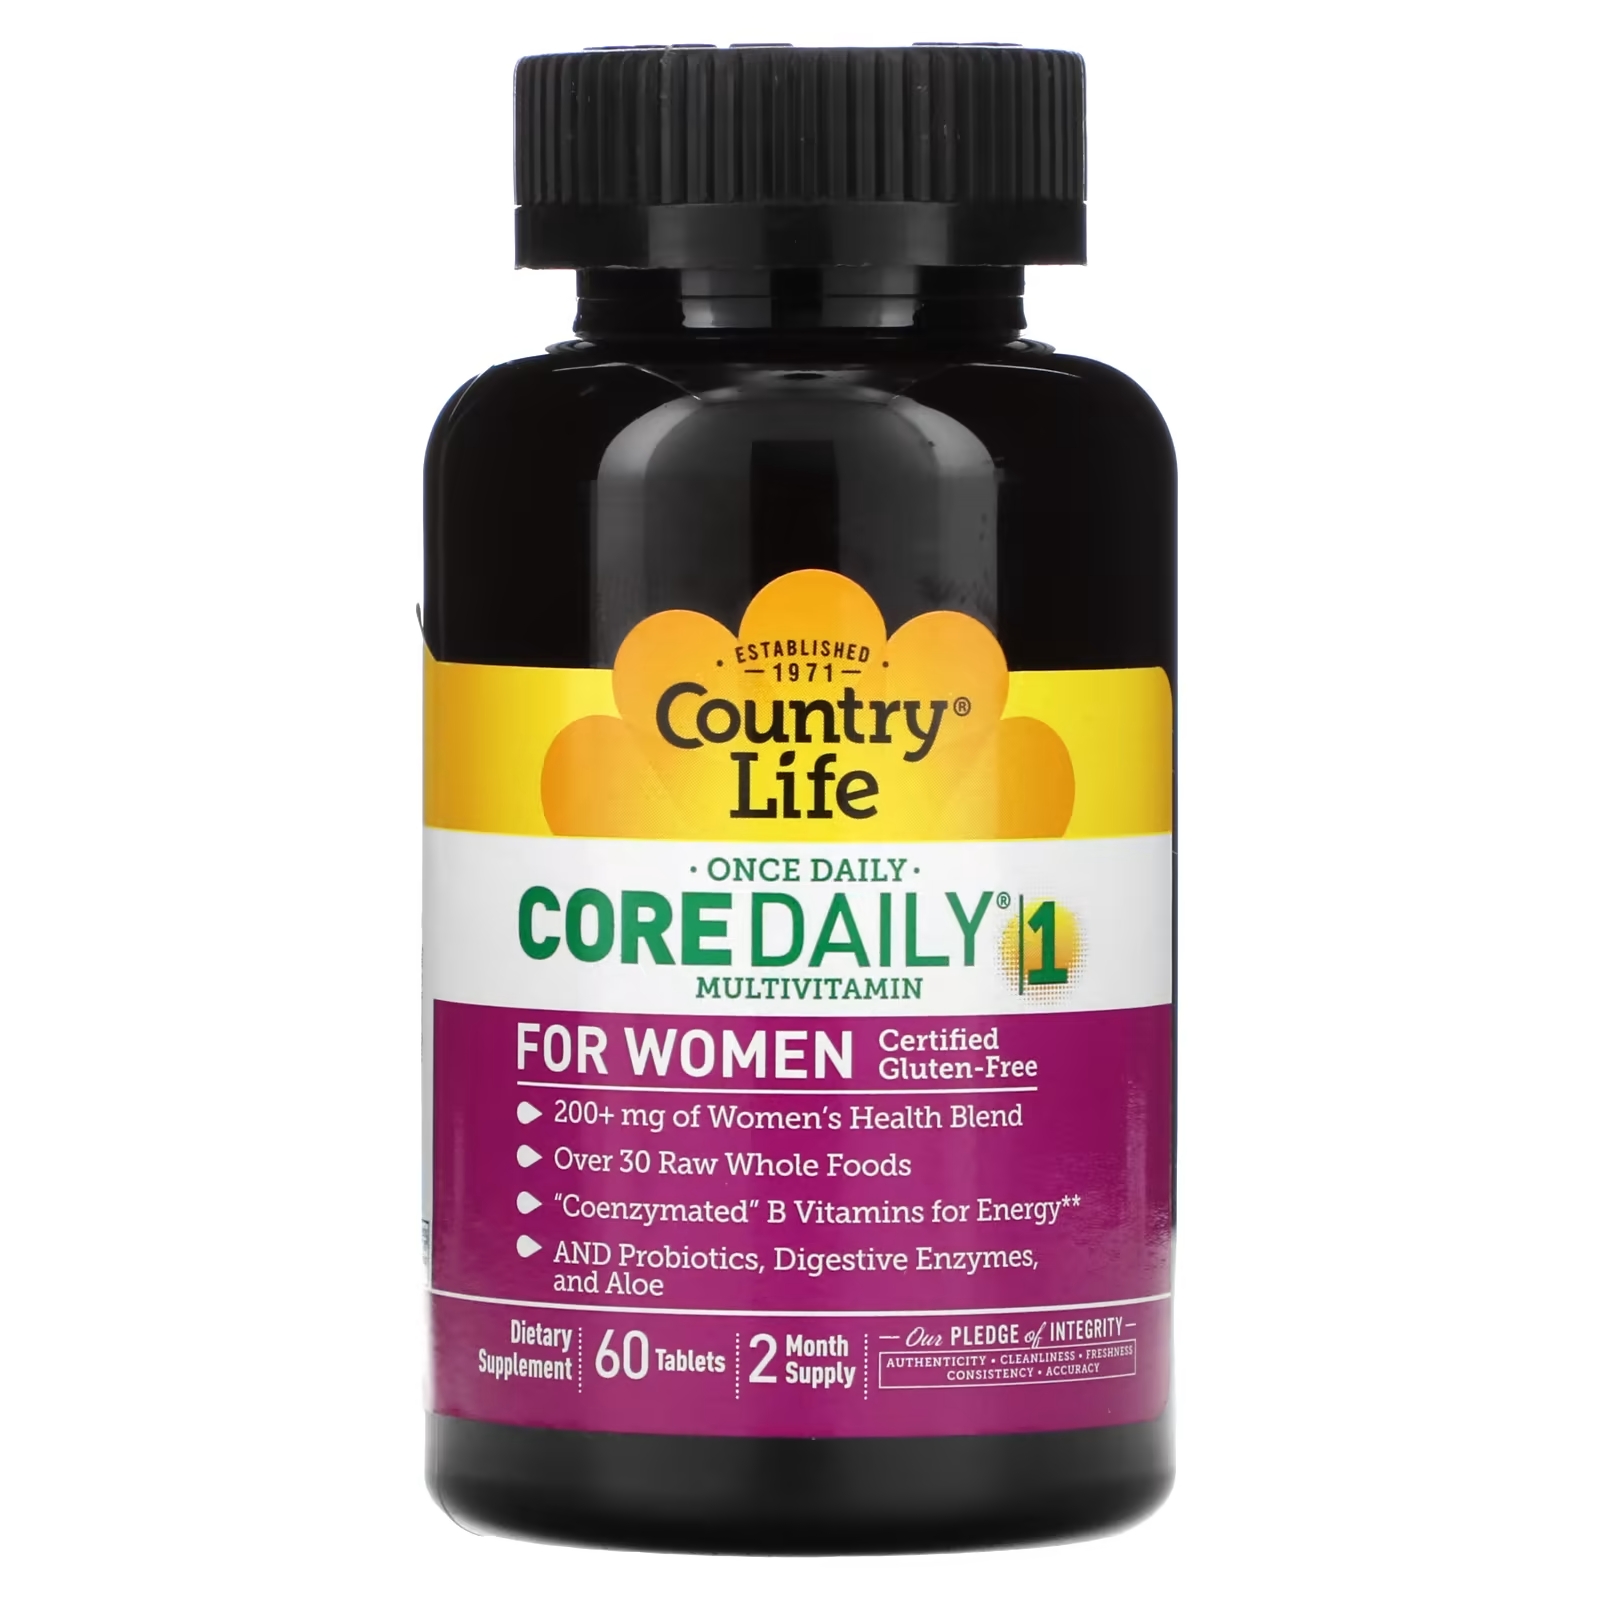 Мультивитамины для Женщин Country Life Core Daily-1, 60 таблеток country life мультивитамины core daily 1 для женщин 60 таблеток